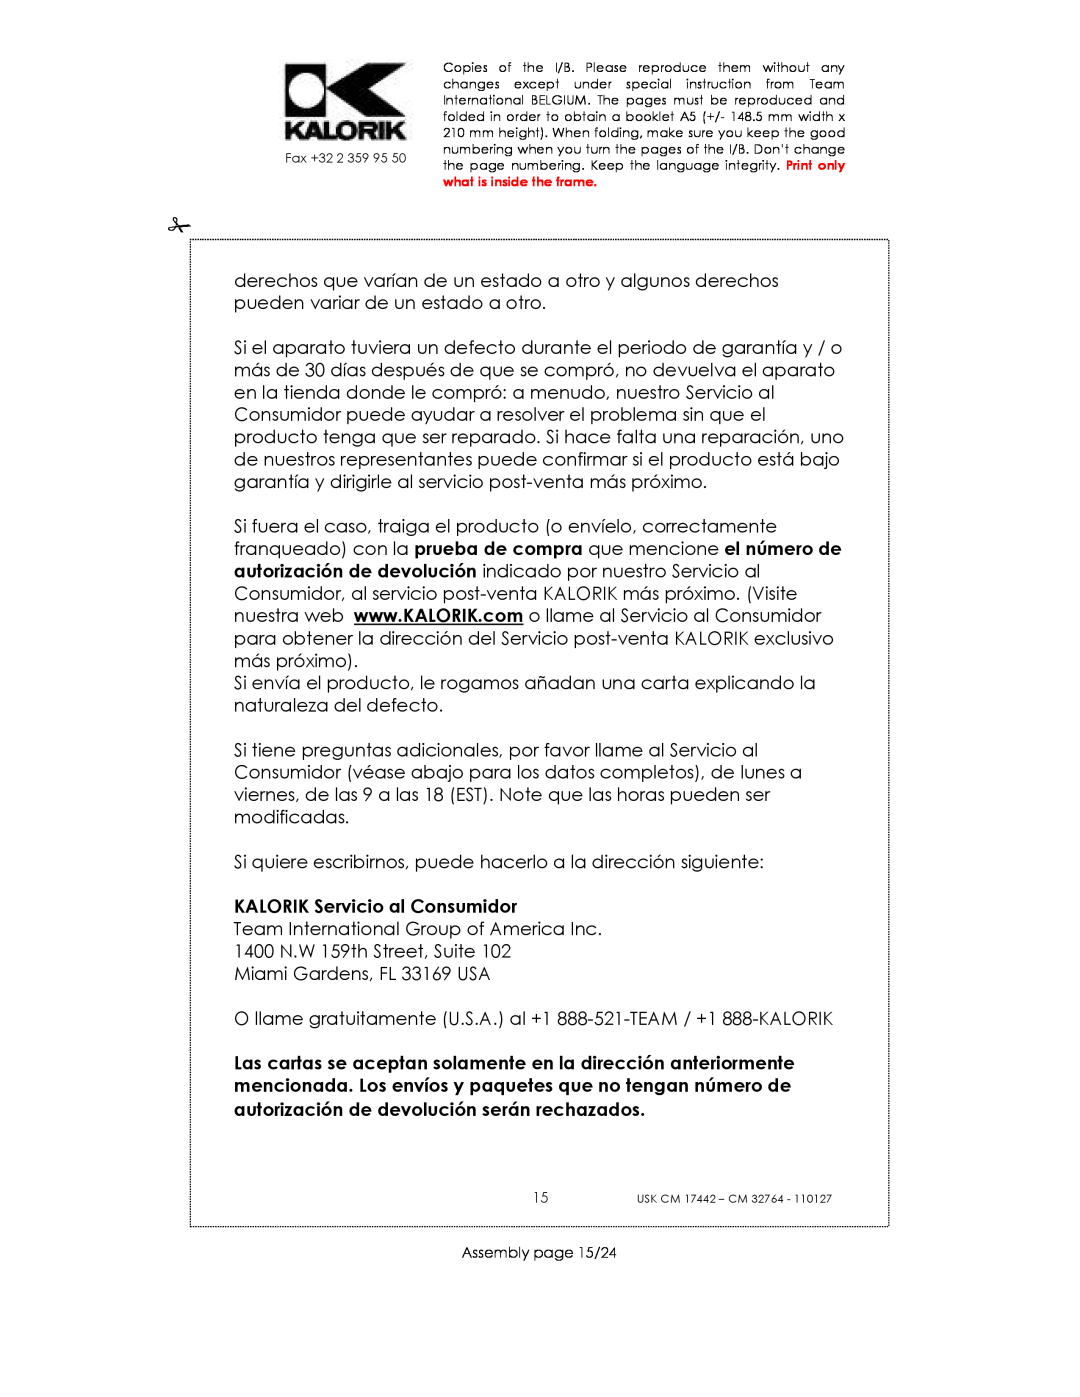 Kalorik USK CM 32764, USK CM 17442 manual KALORIK Servicio al Consumidor, Assembly page 15/24 